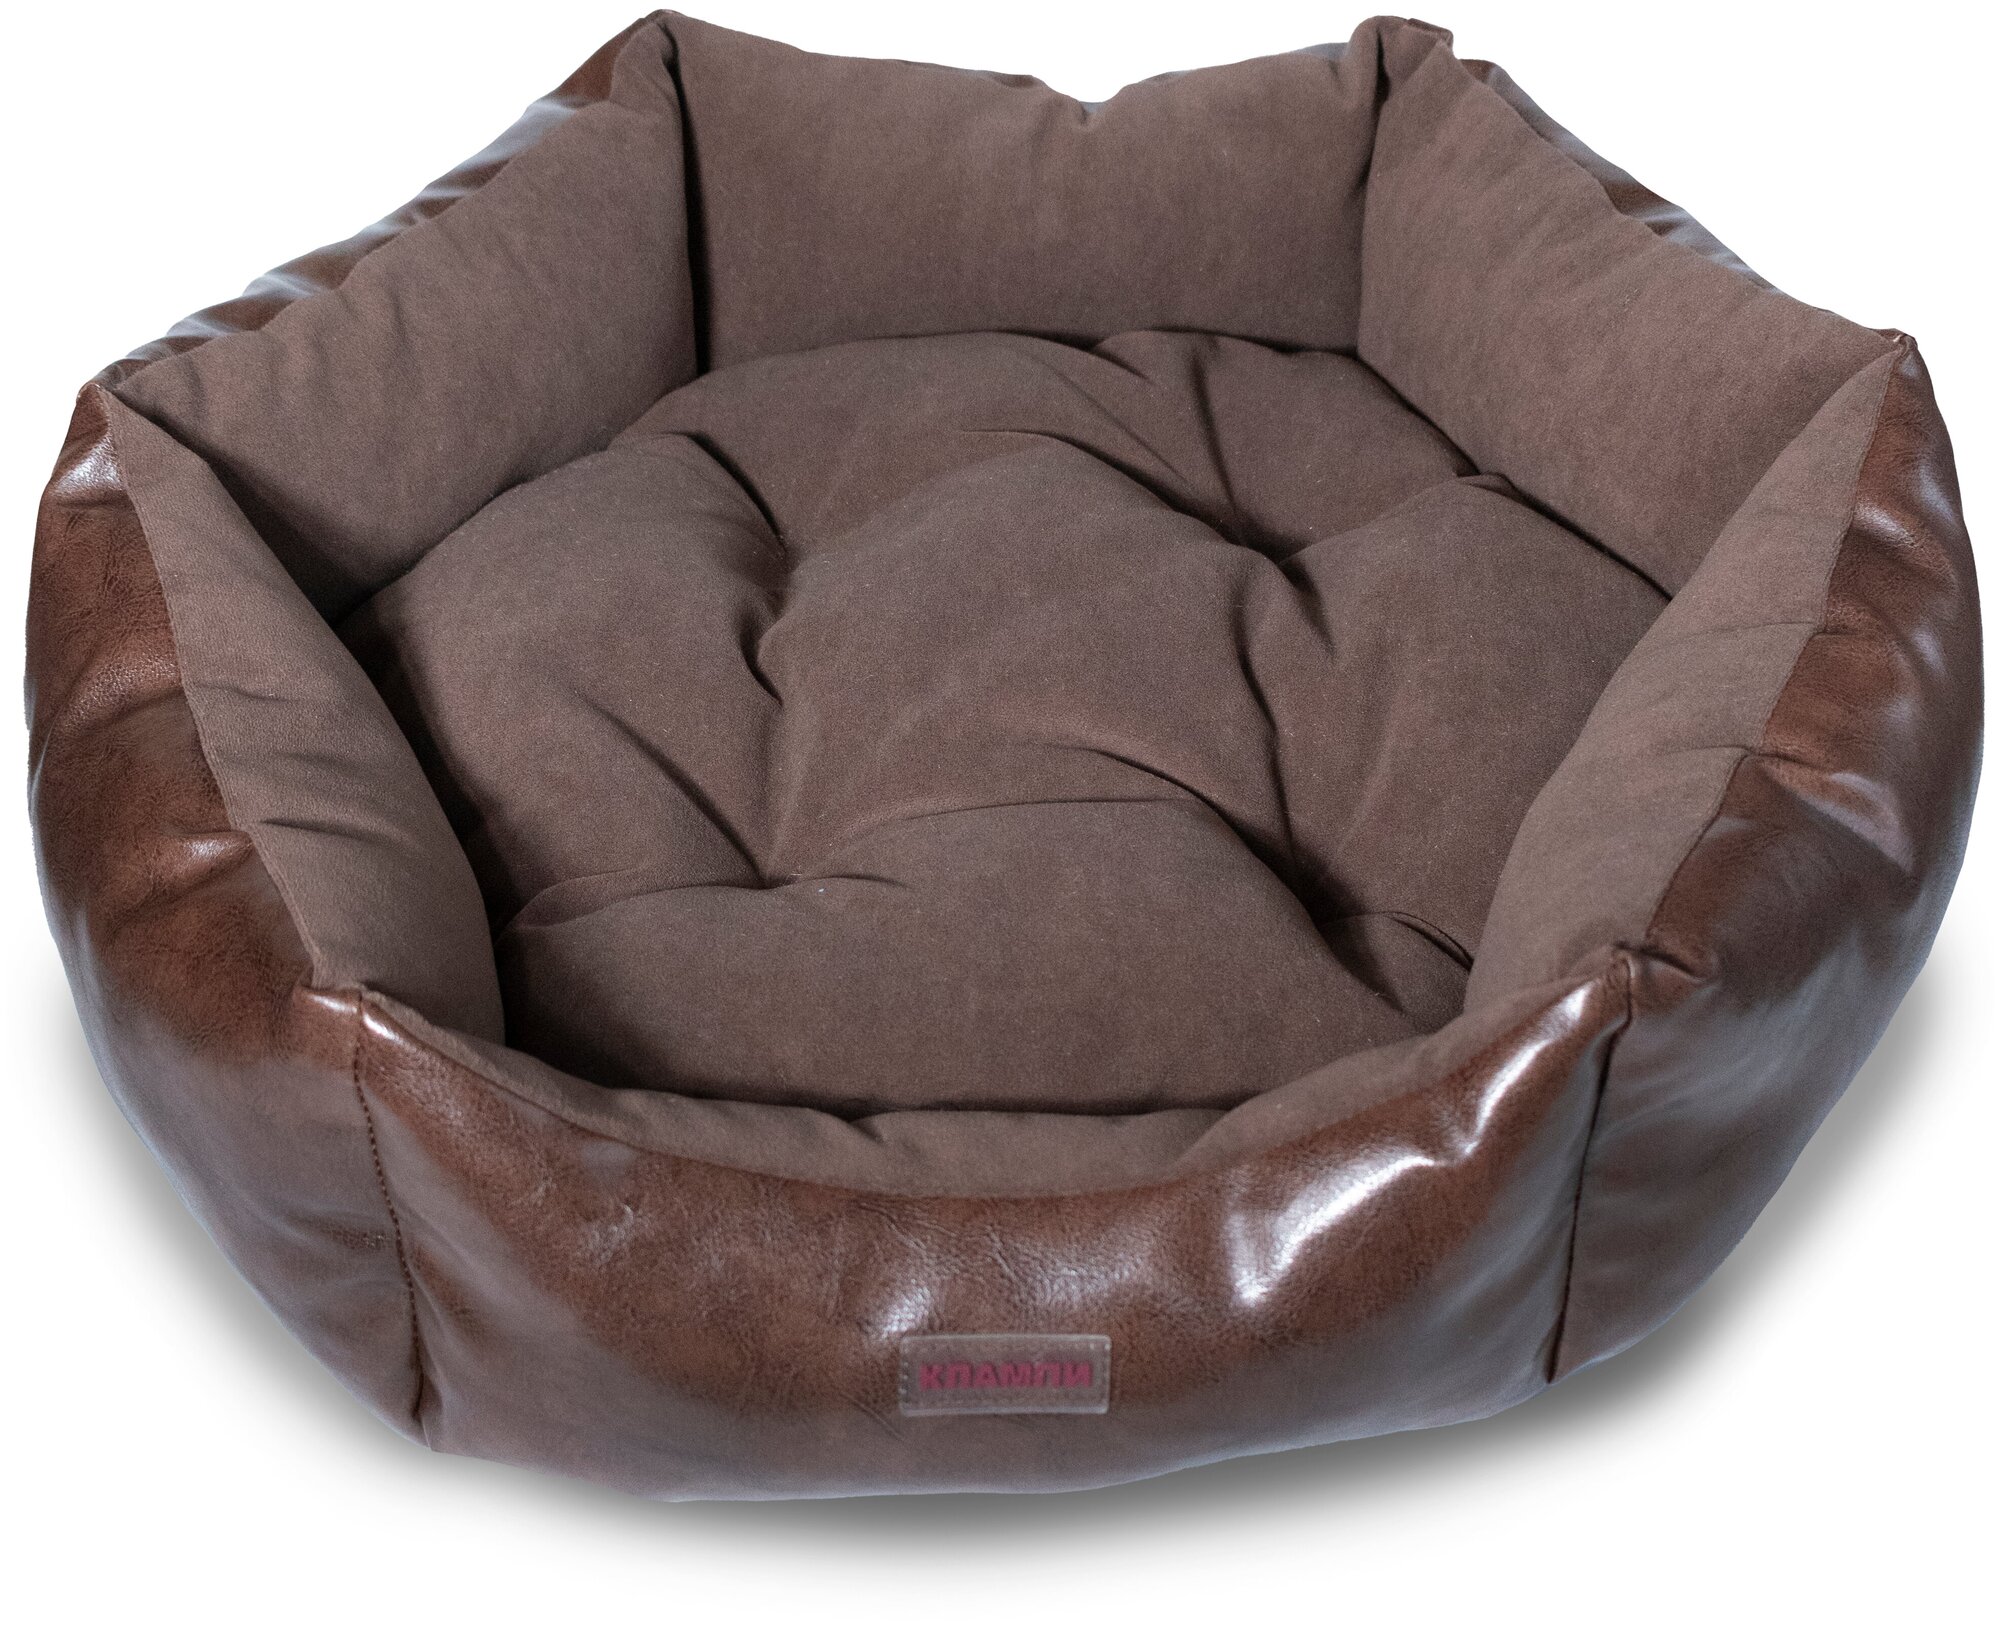 Лежанка для собаки Клампи Элит, M, 55х55 см, коричневая